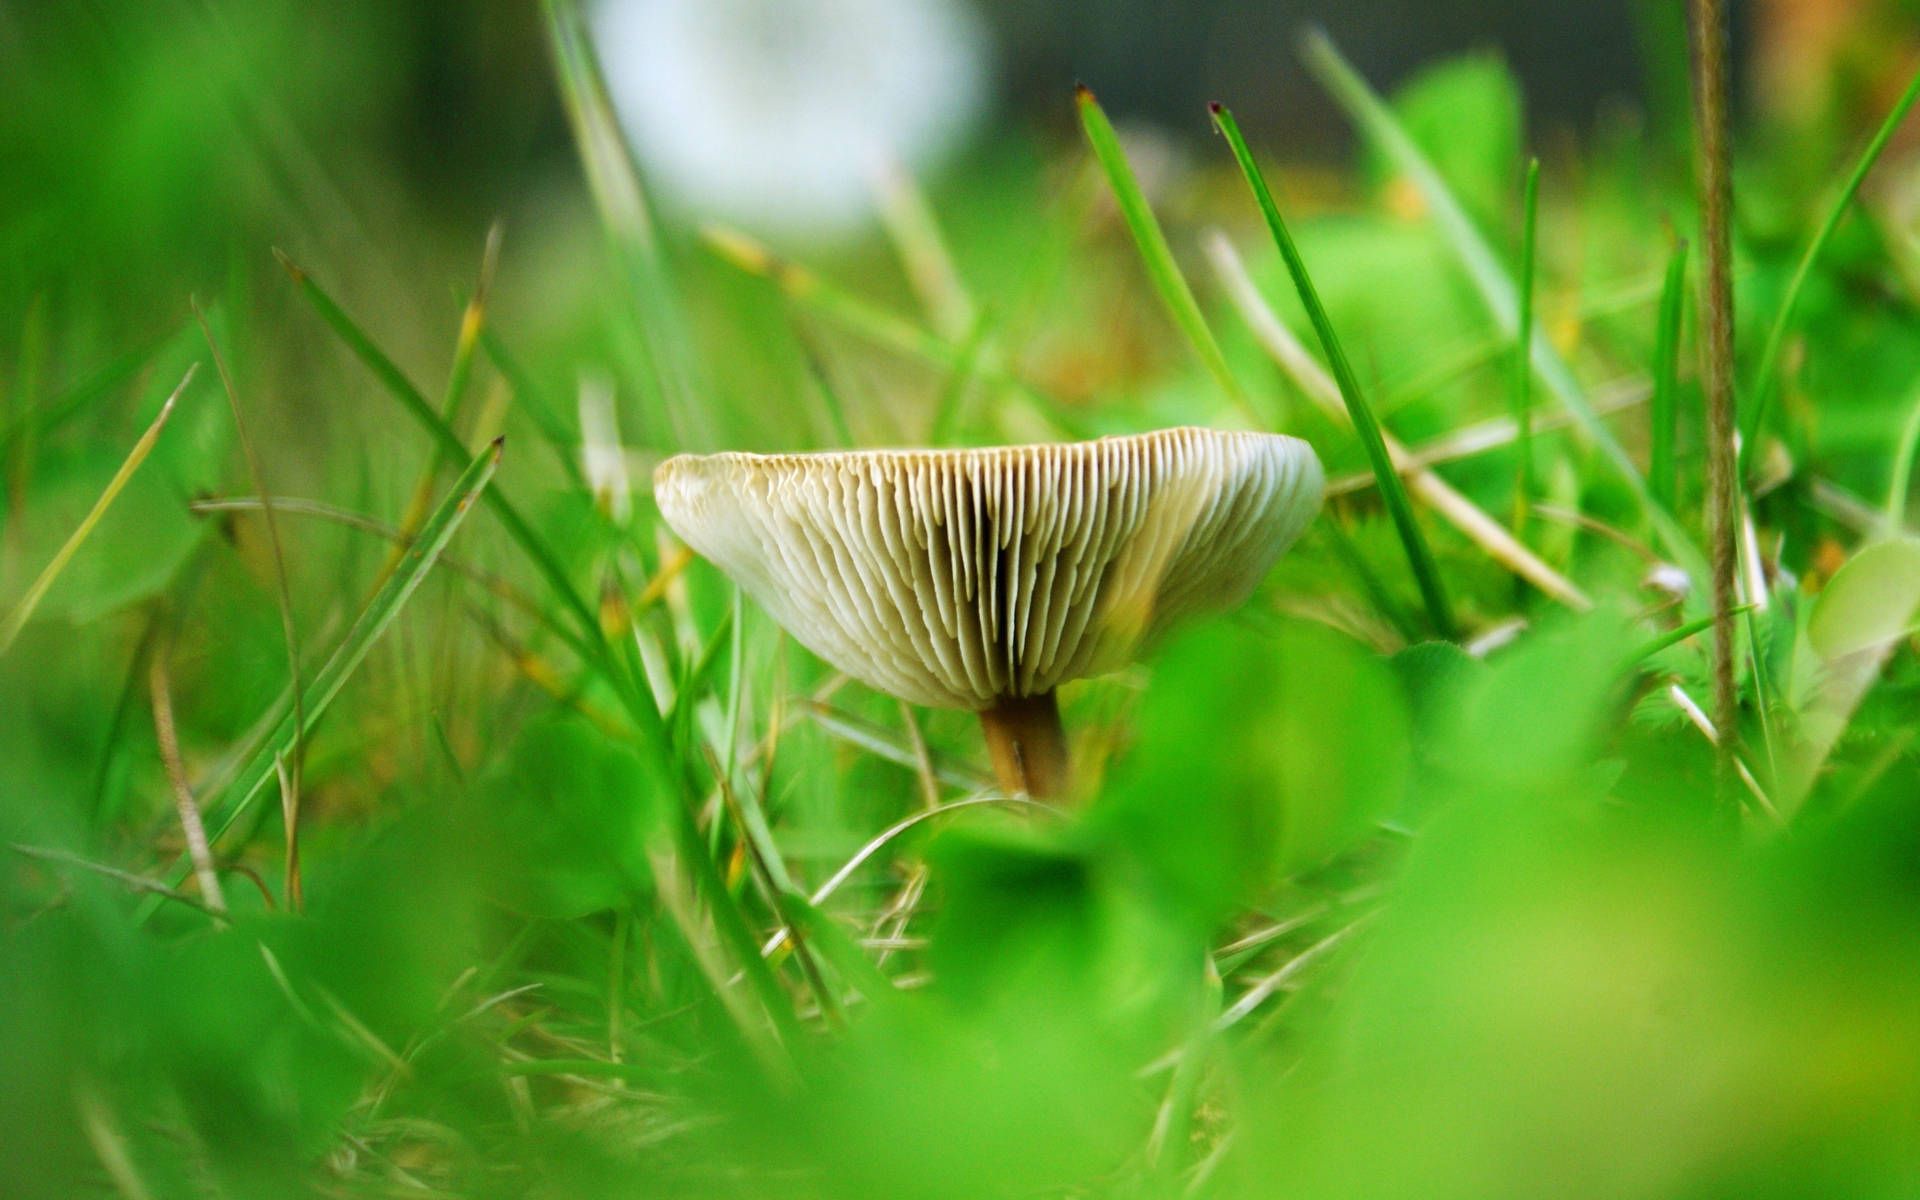 Cute Wavy Mushroom On Grass